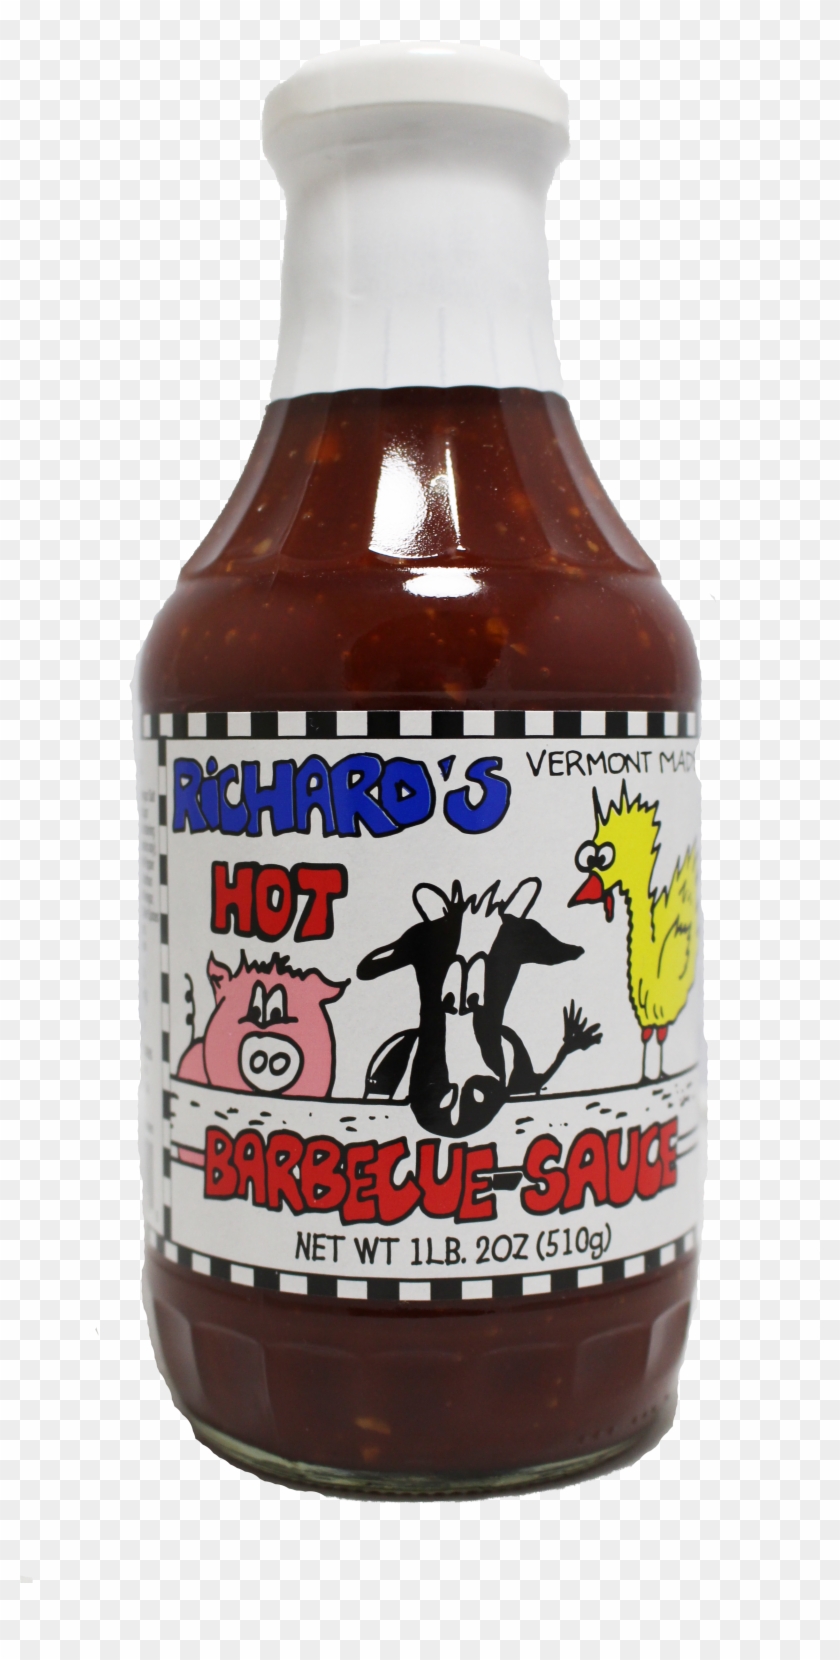 Richard's Hot Bbq Sauce - Richards Bbq Sauce Clipart